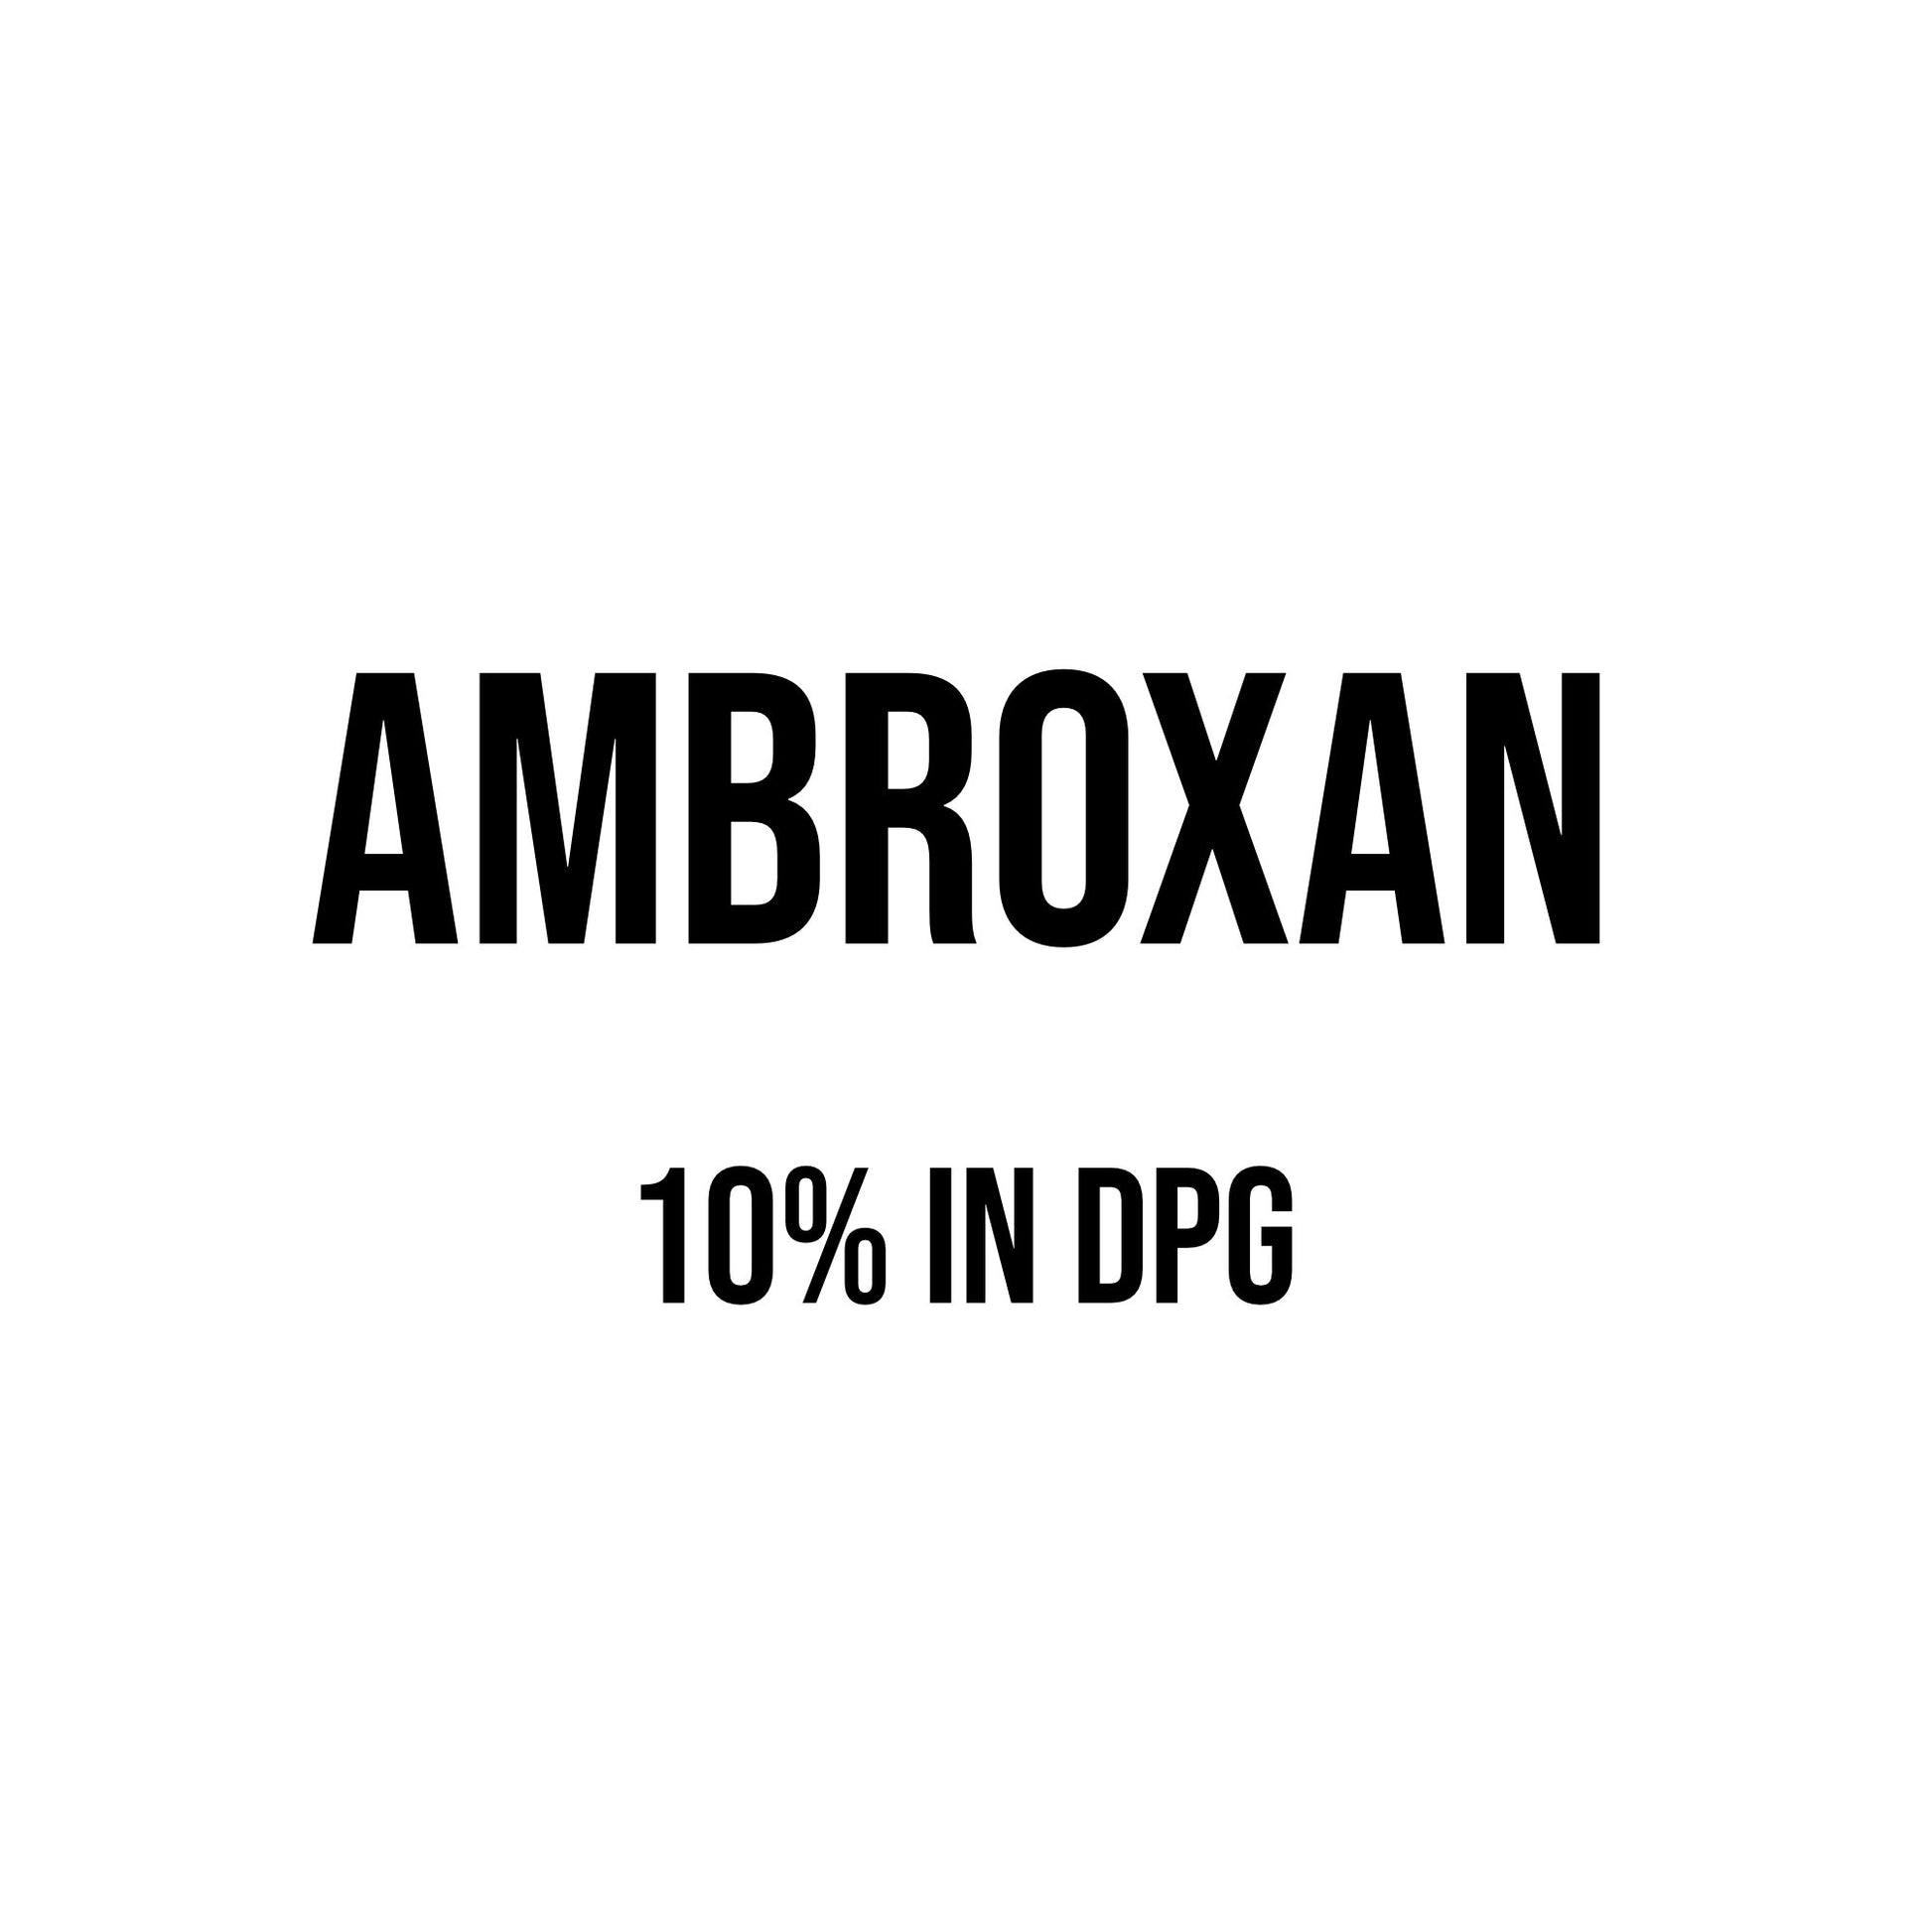 Ambroxan 10% in DPG